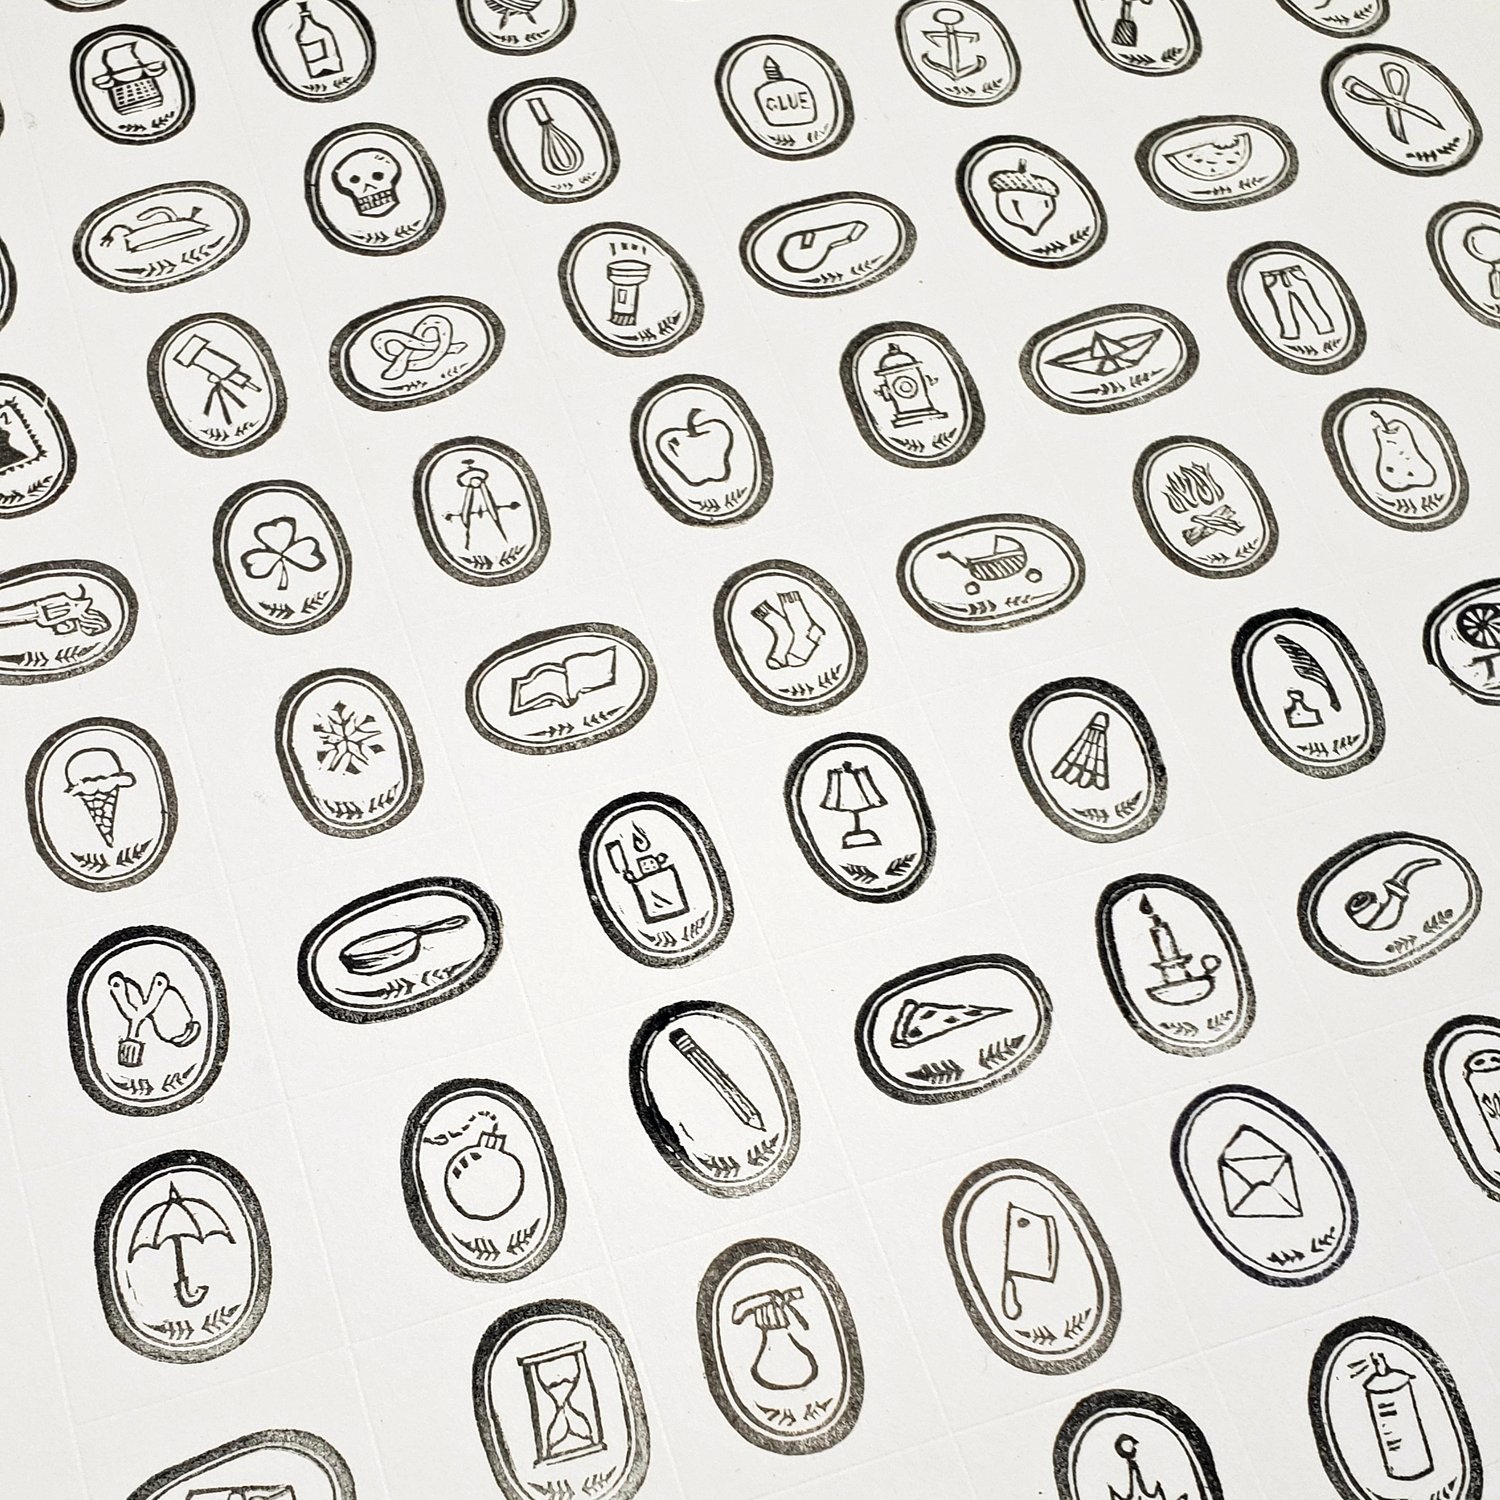 144 Mundane Objects by Stacie Dolin - Linoprint